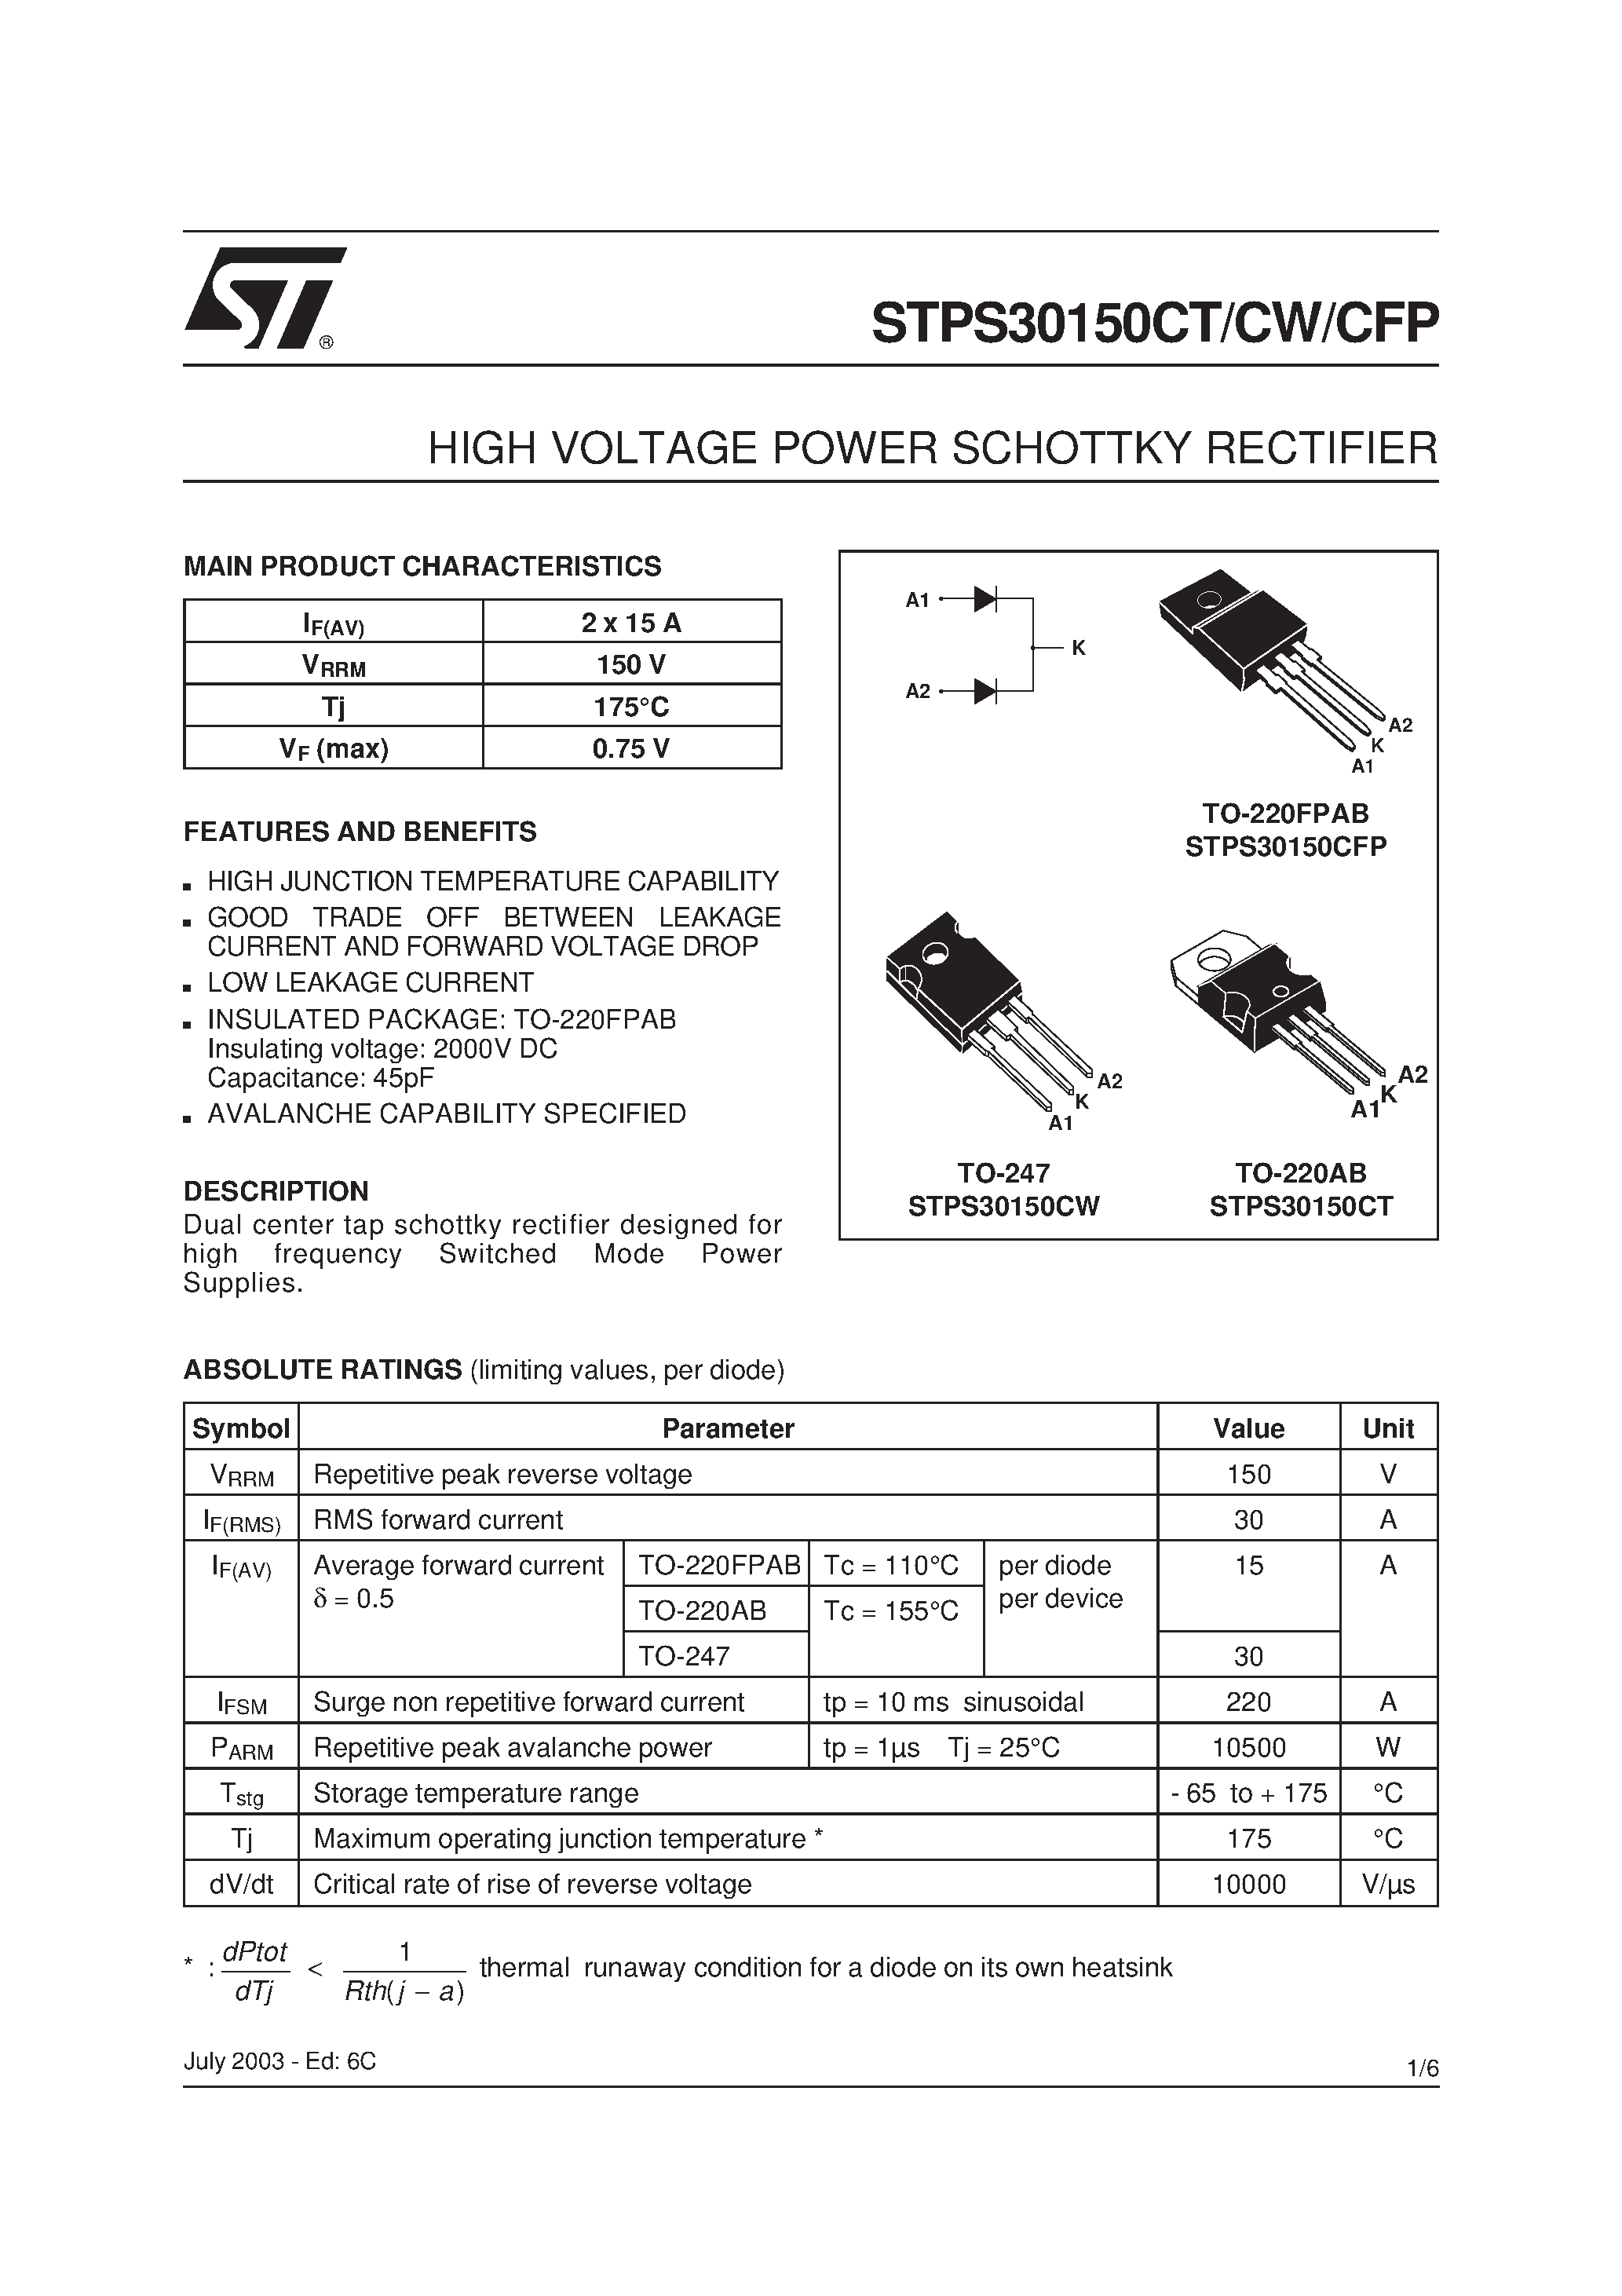 Datasheet STPS30150CFP - (STPS30150CT/CW/CFP) HIGH VOLTAGE POWER SCHOTTKY RECTIFIER page 1